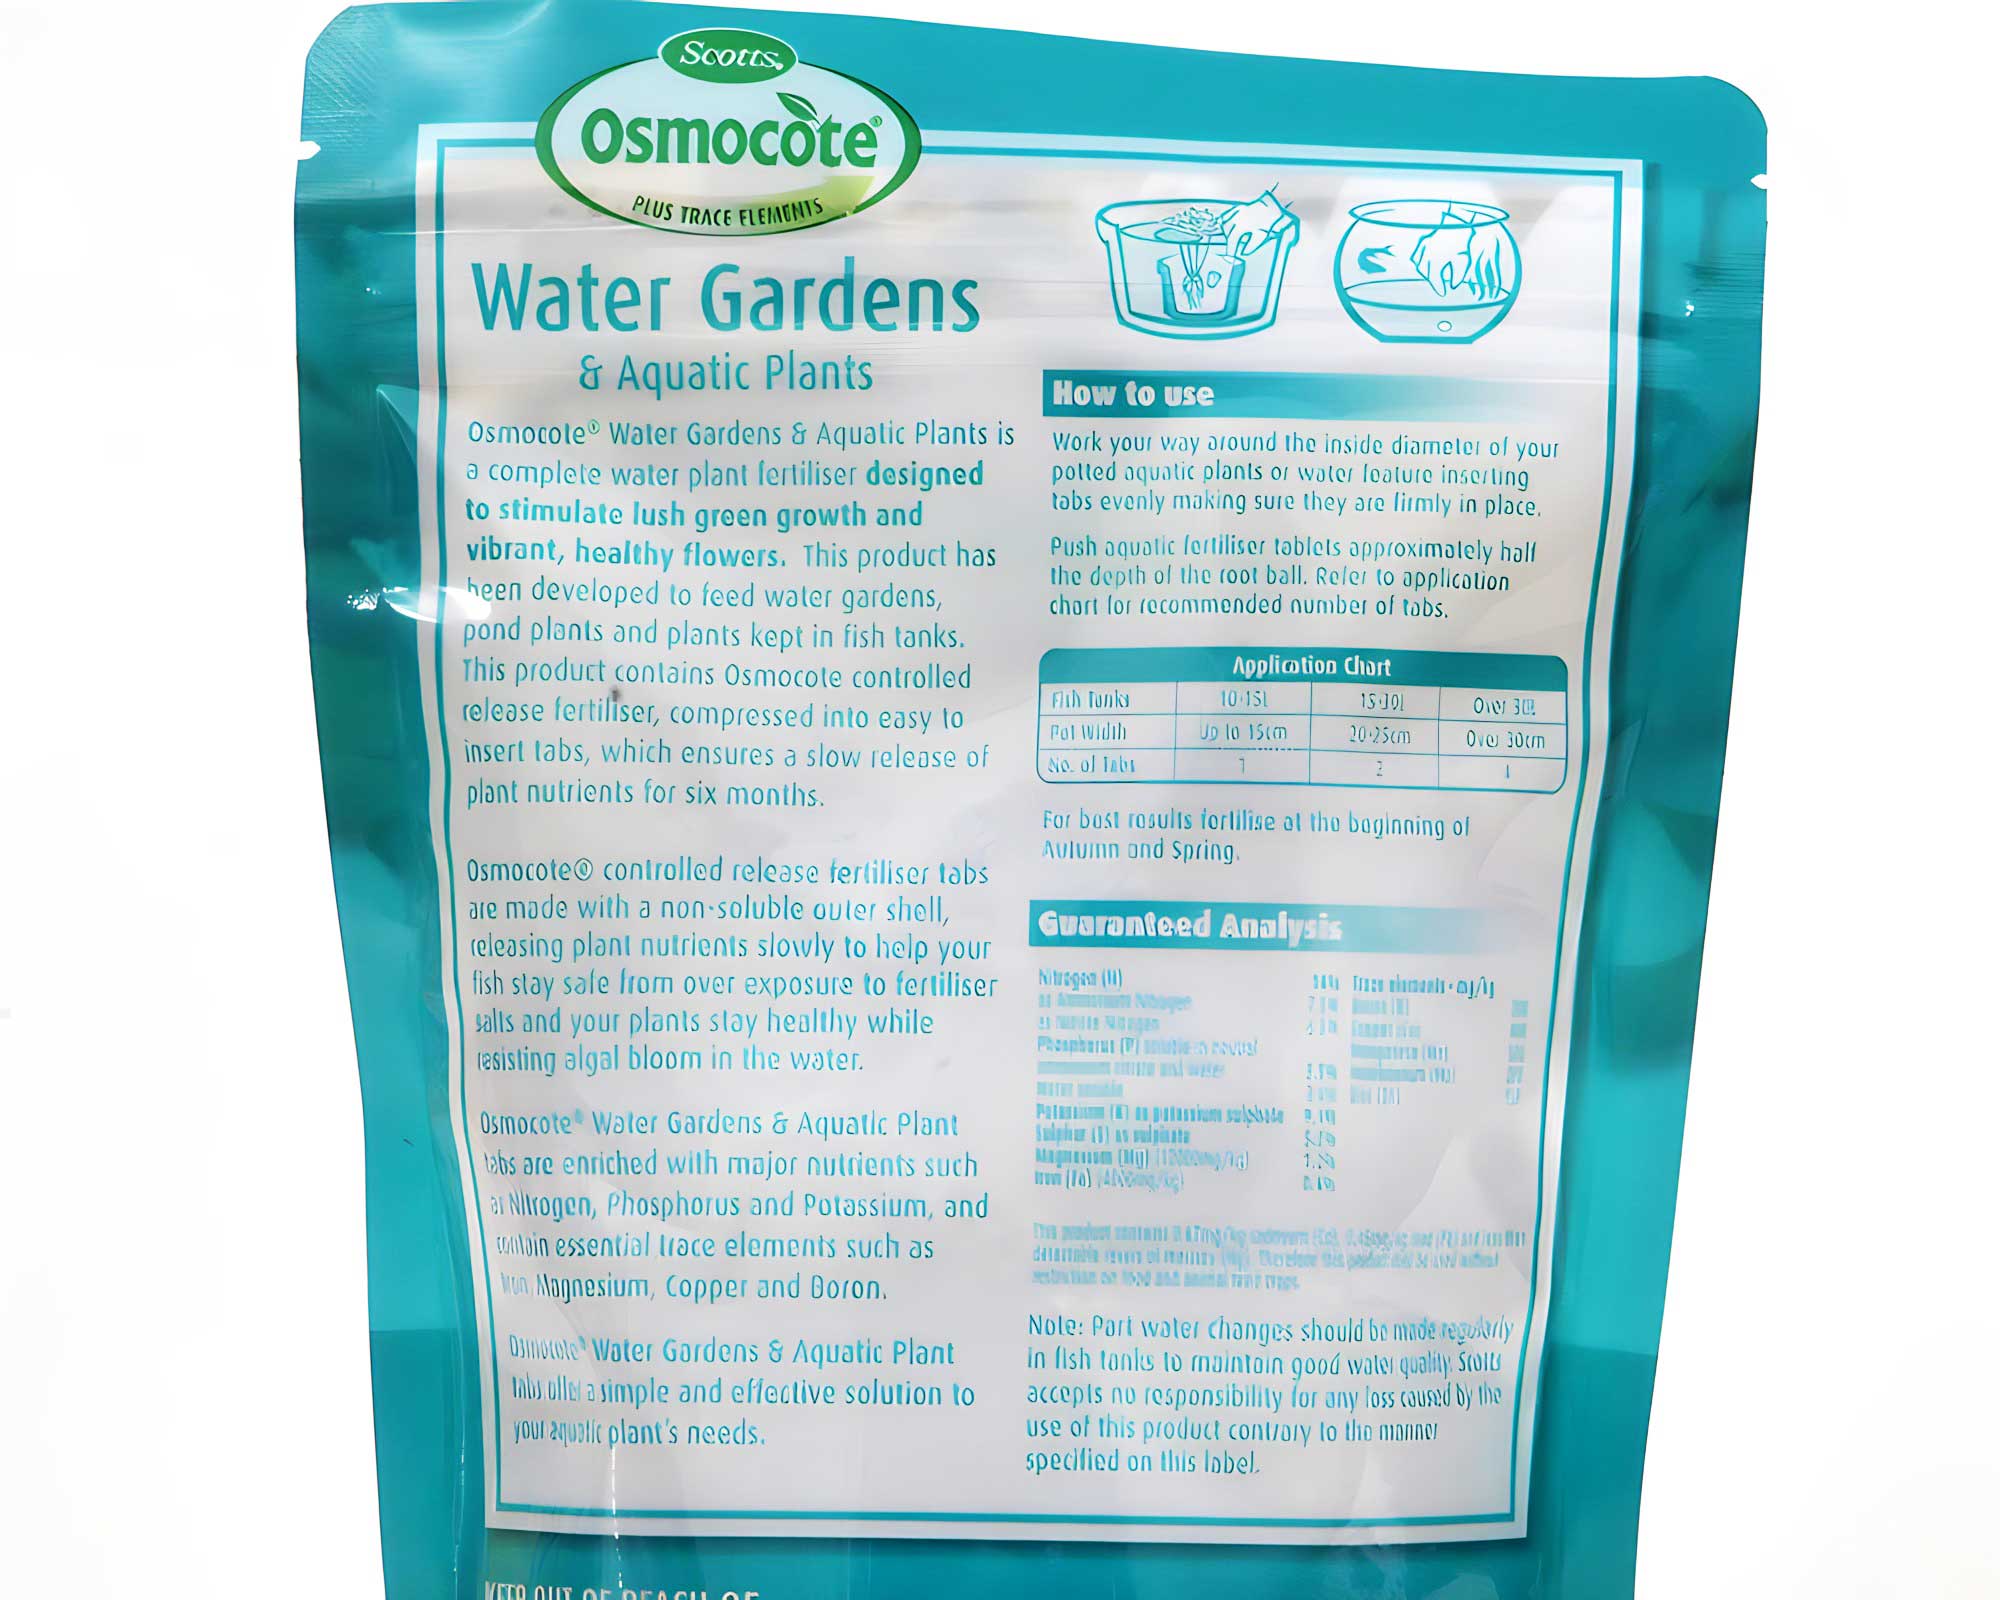 Osmocote Water Gardens Info Panel